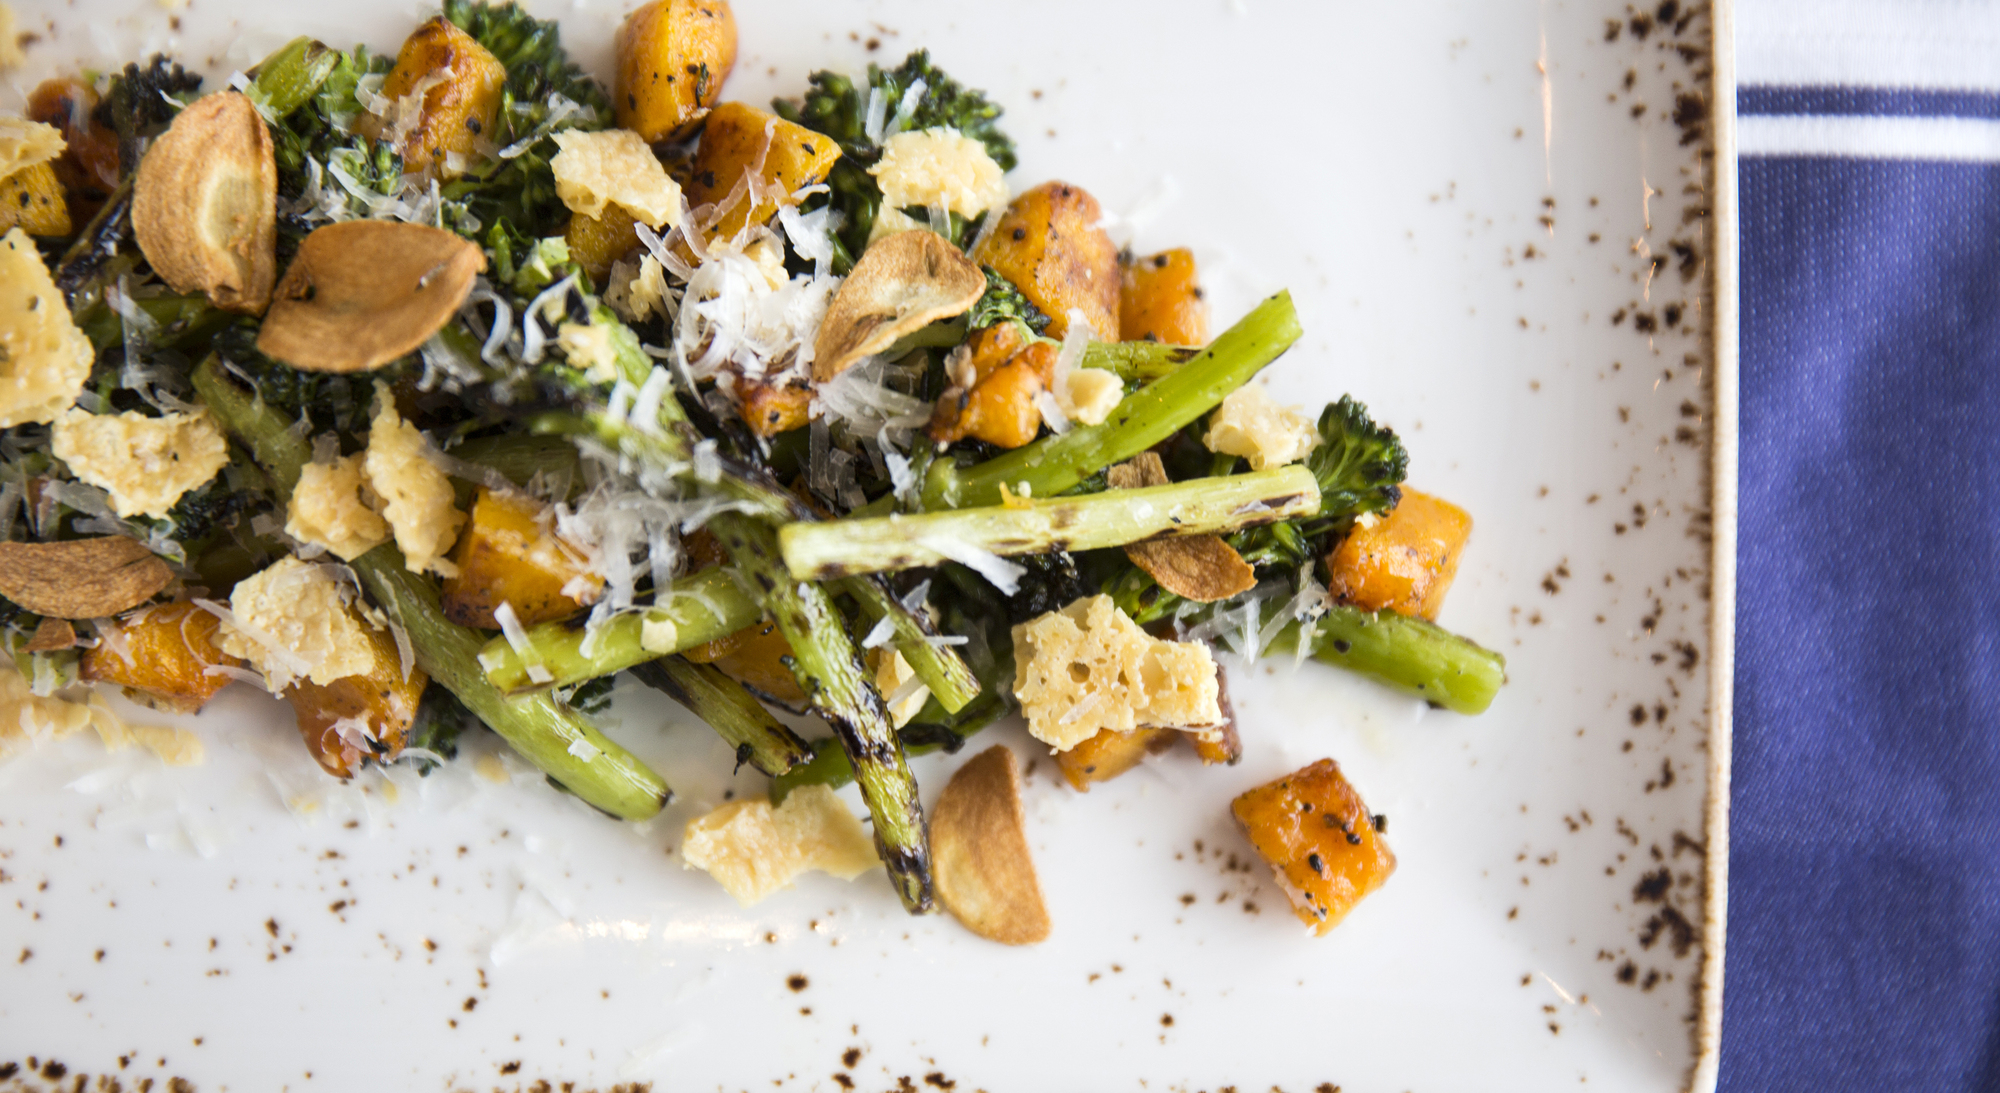 The broccolini side dish at Cedar + Stone, Urban Table.